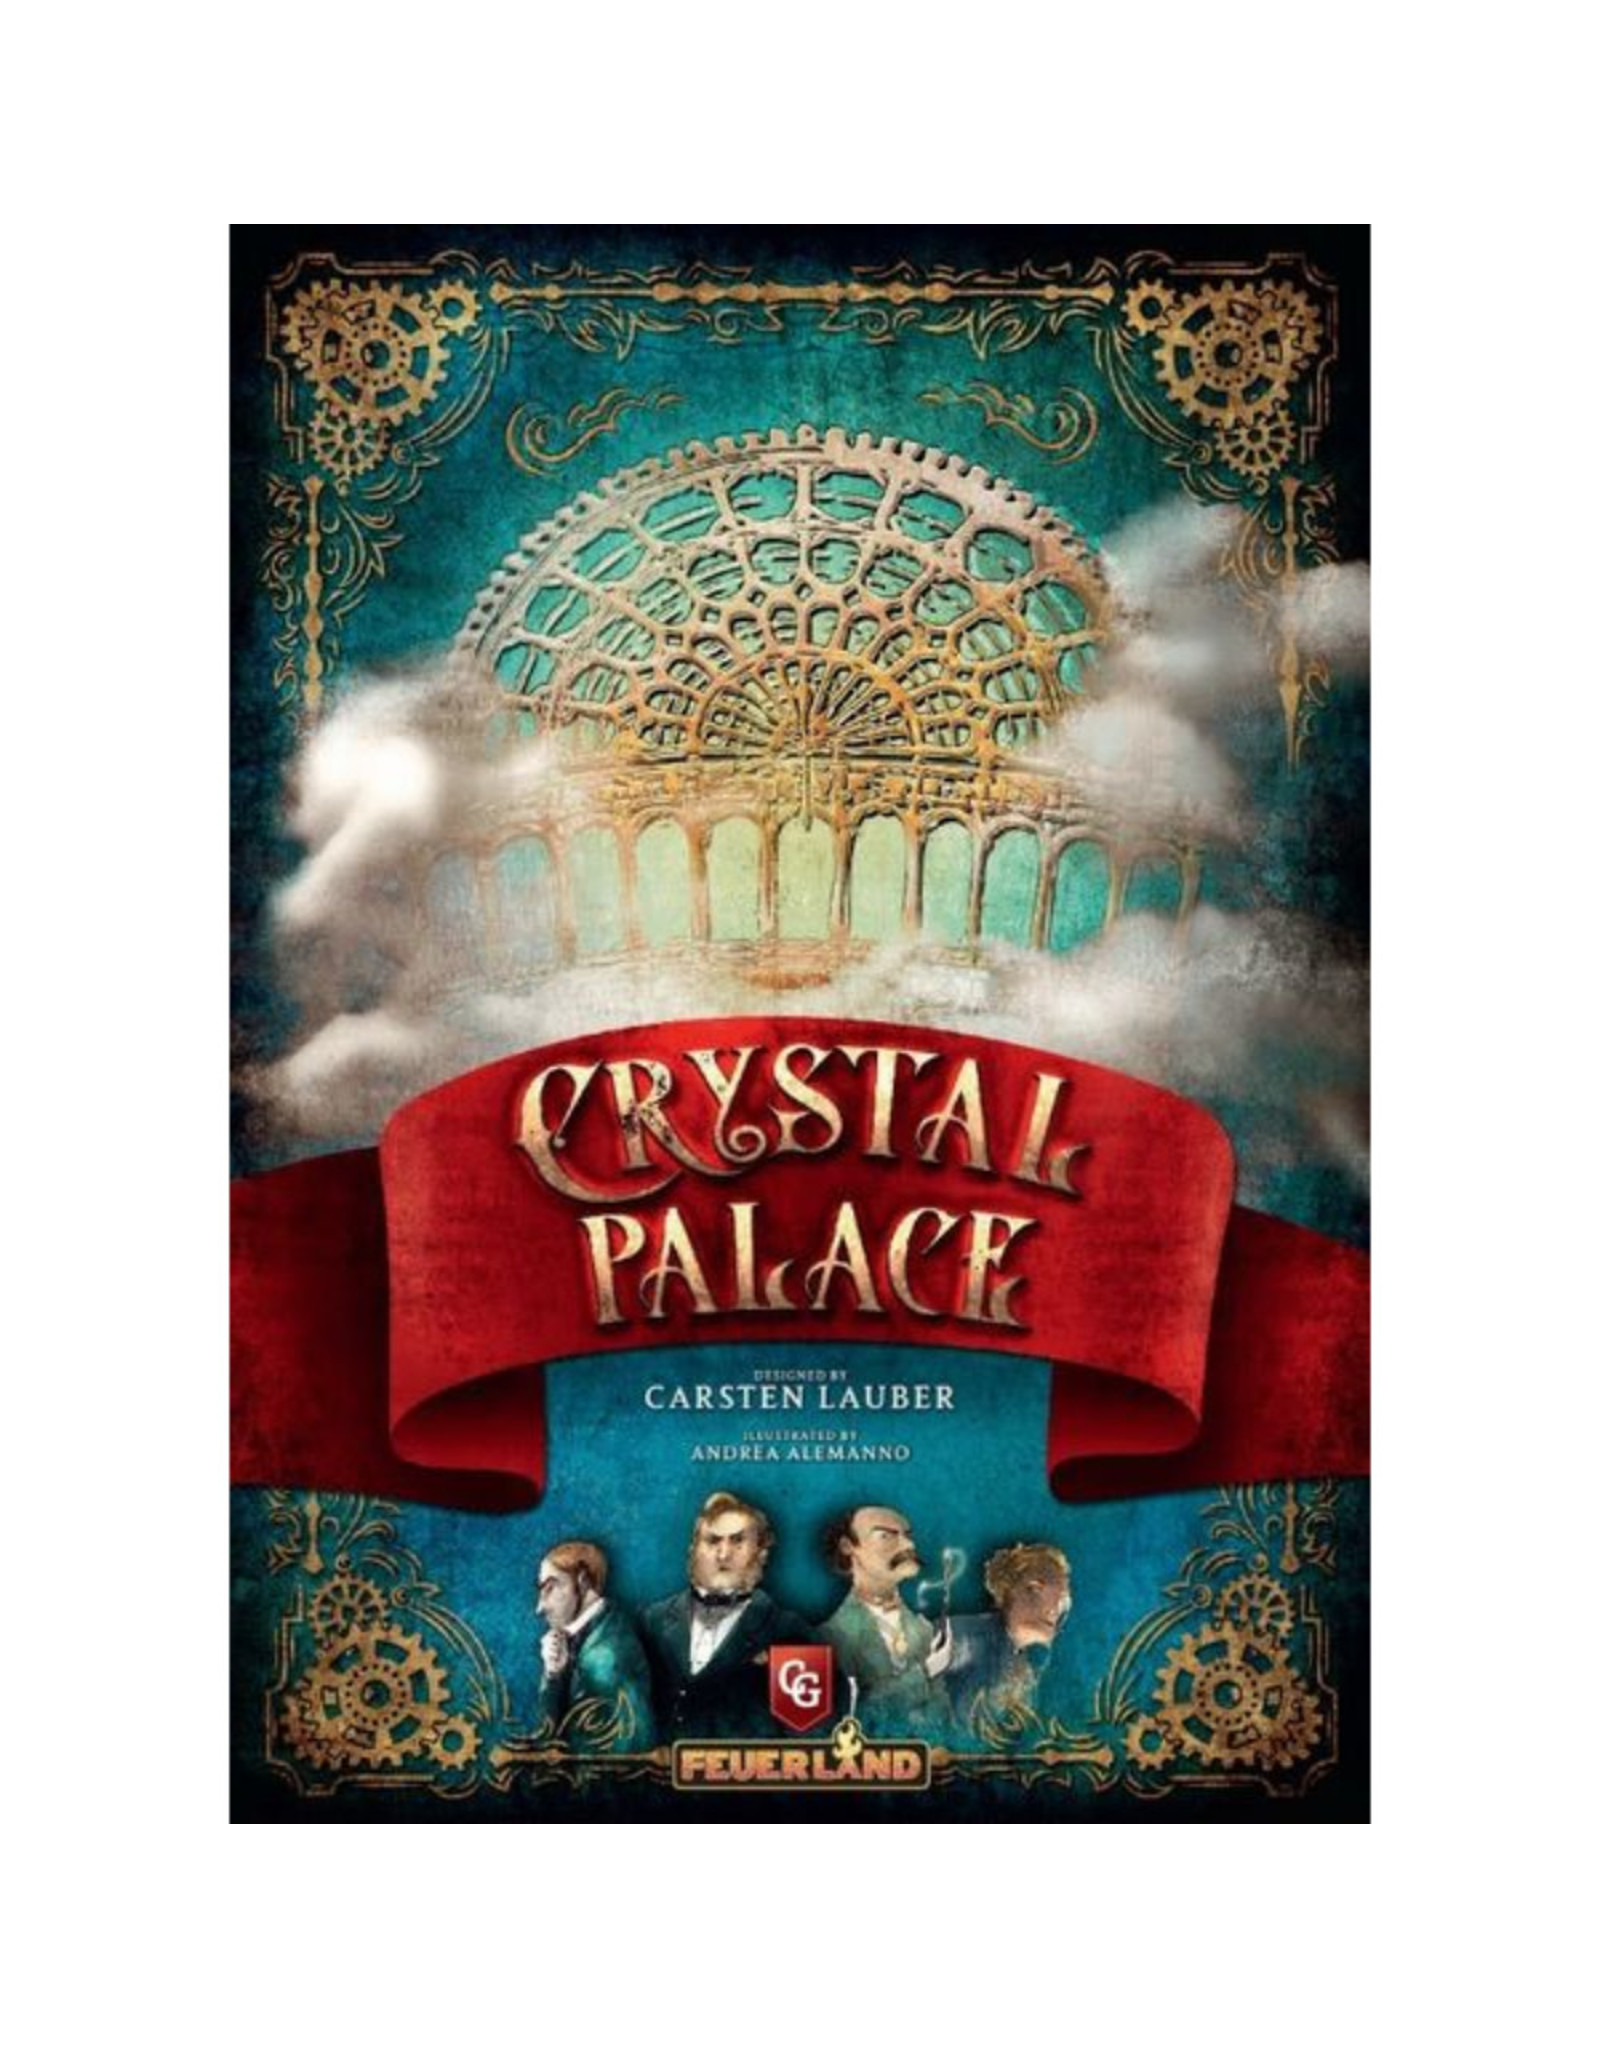 Crystal Palace